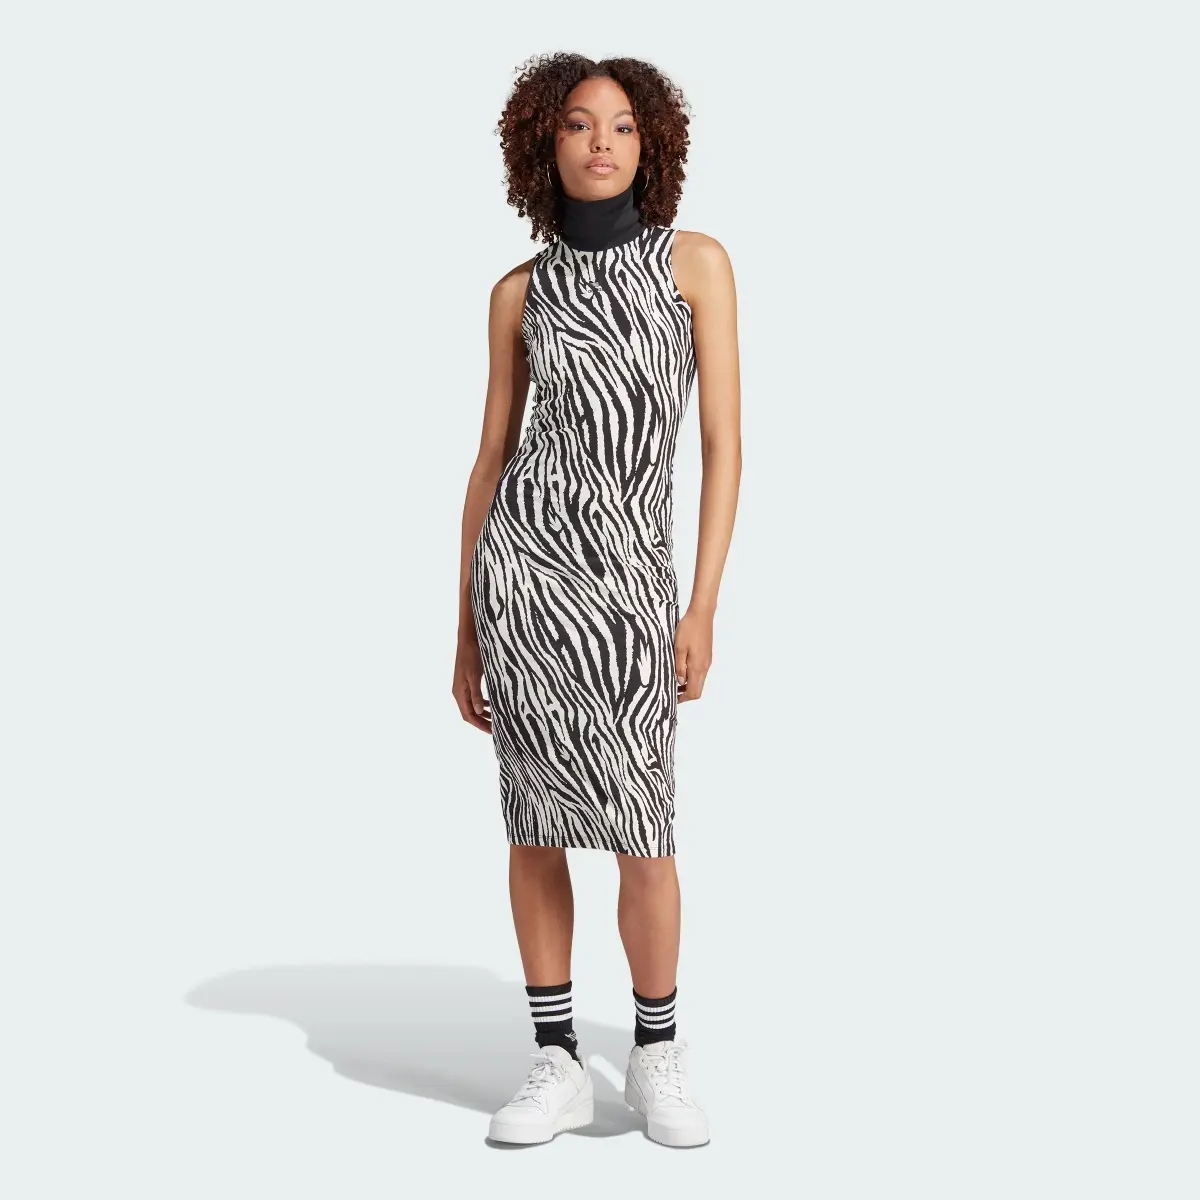 Adidas Allover Zebra Animal Print Dress. 2